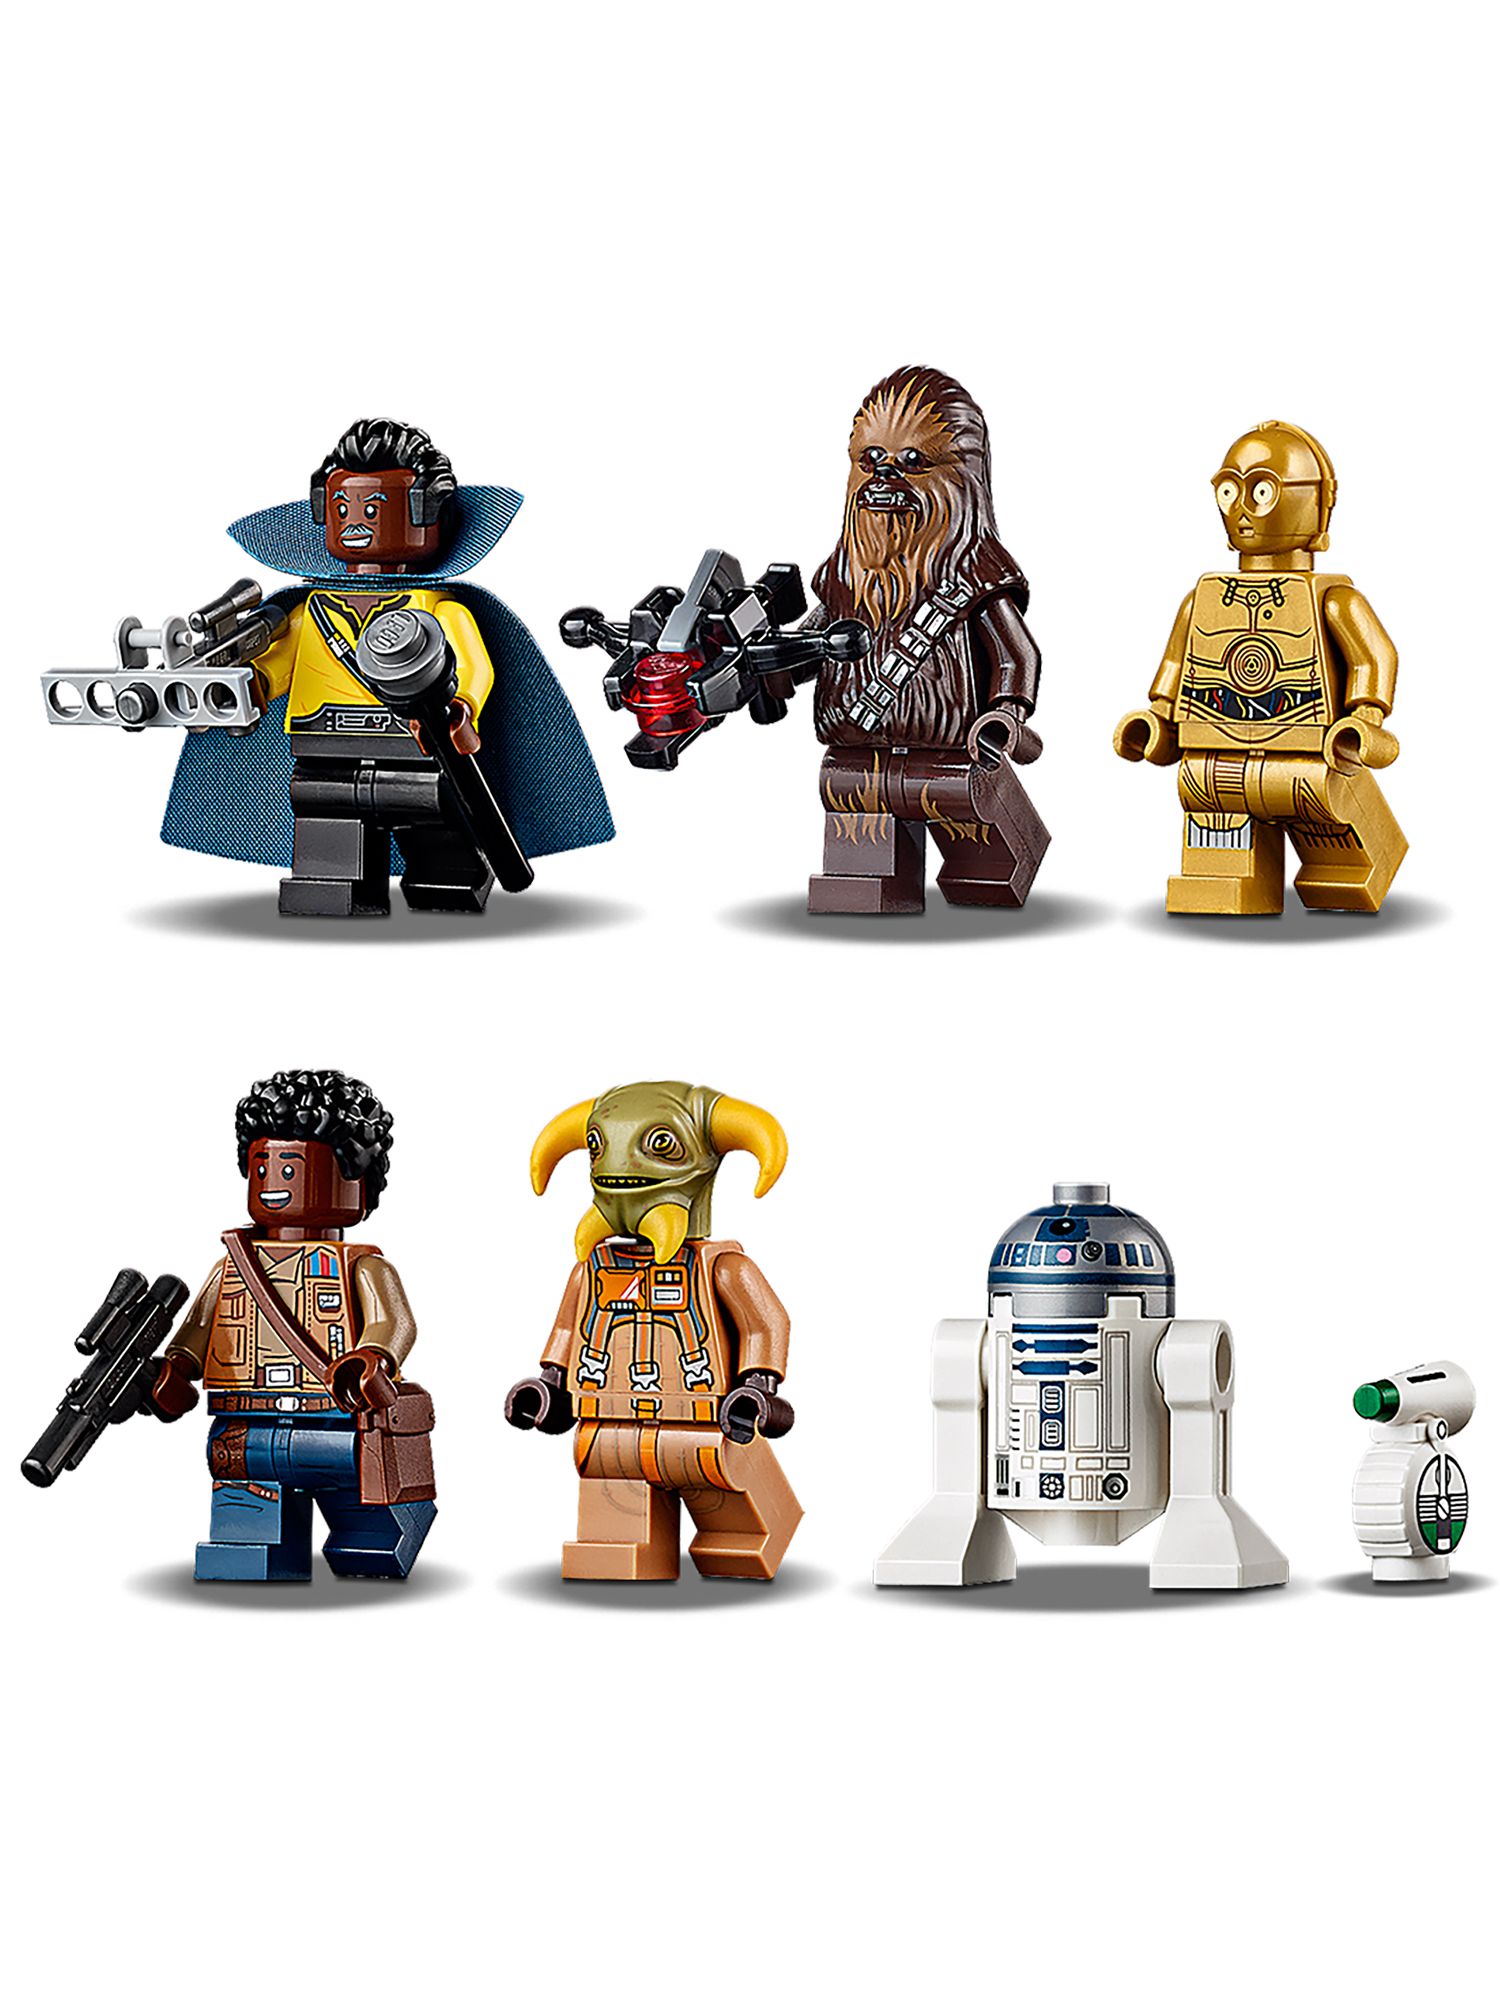  LEGO Star Wars Millennium Falcon 75257 Building Set